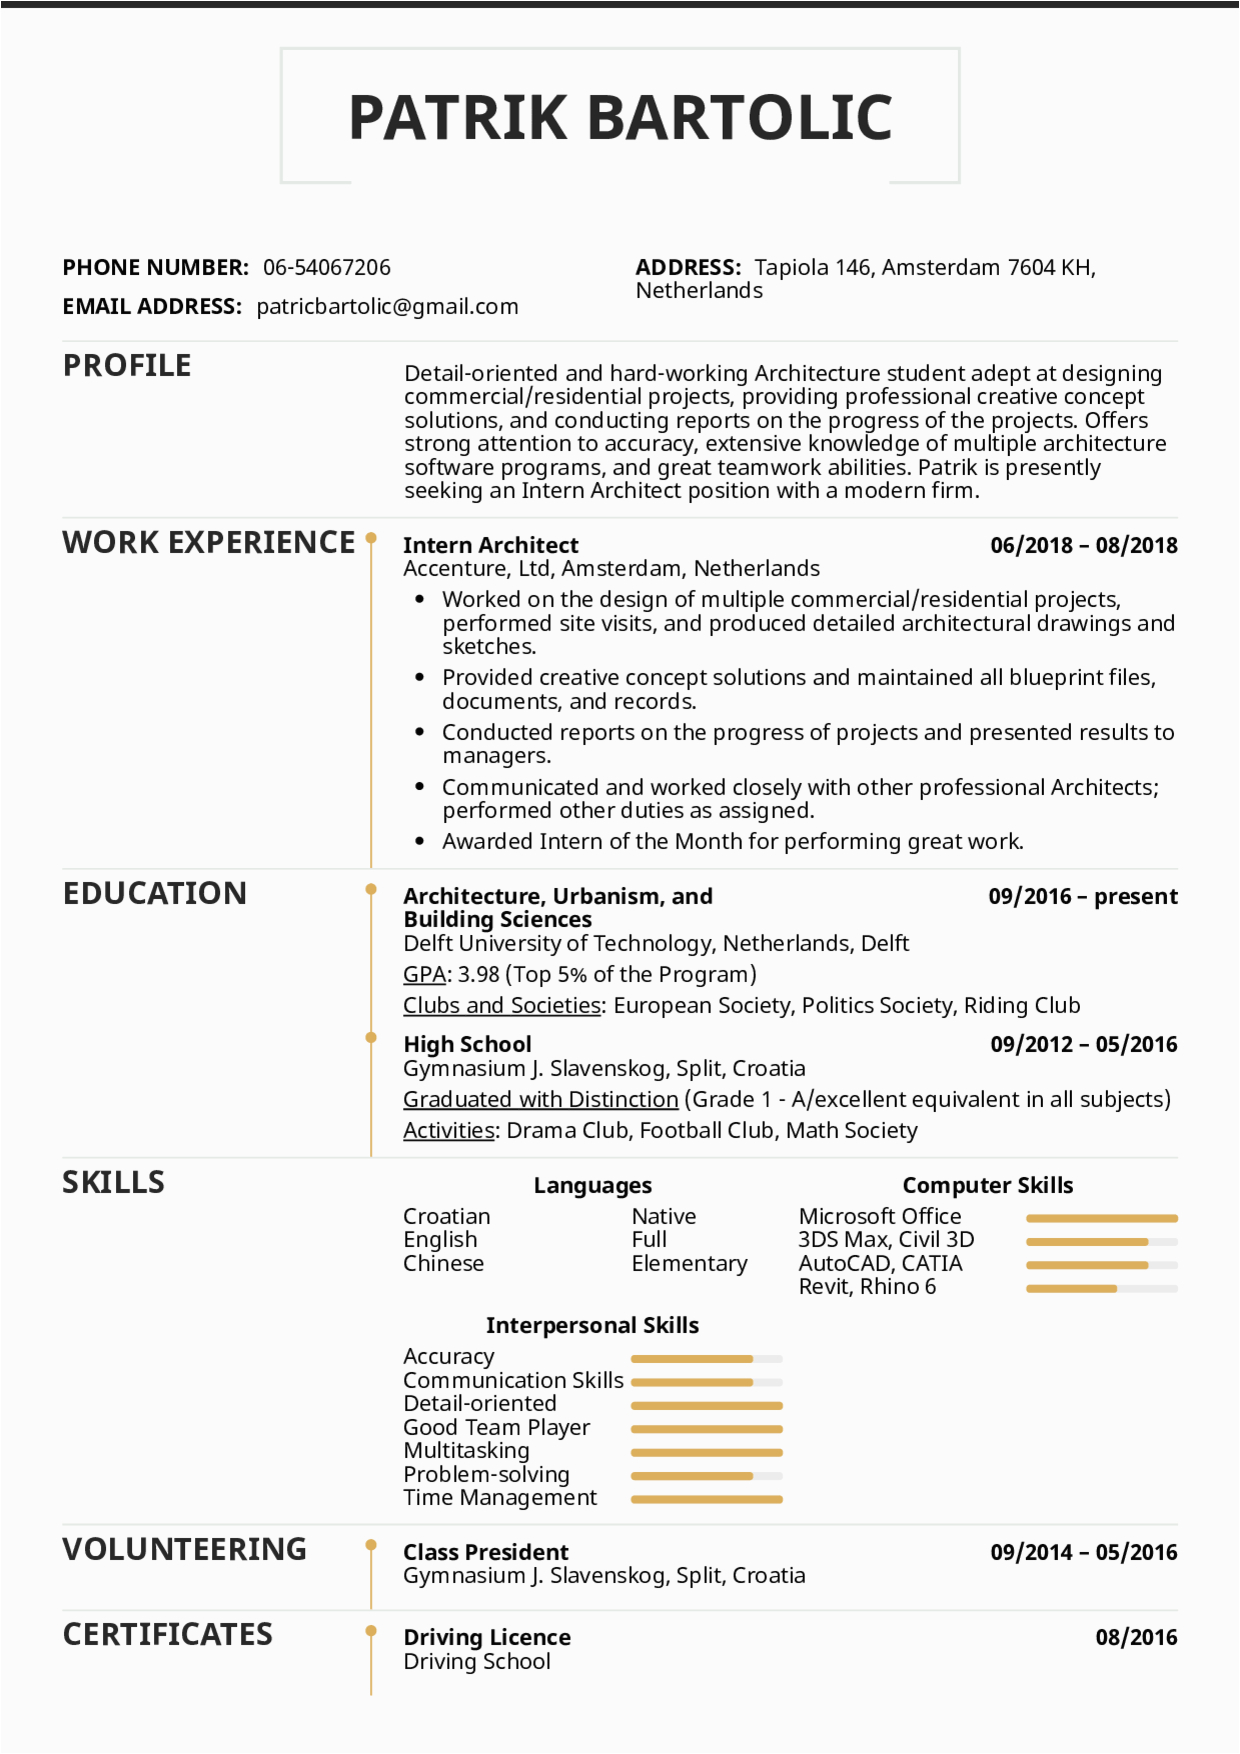 Sample Resume Of An Architecture Student Architecture Student Resume for Internship Dinosaurdiscs